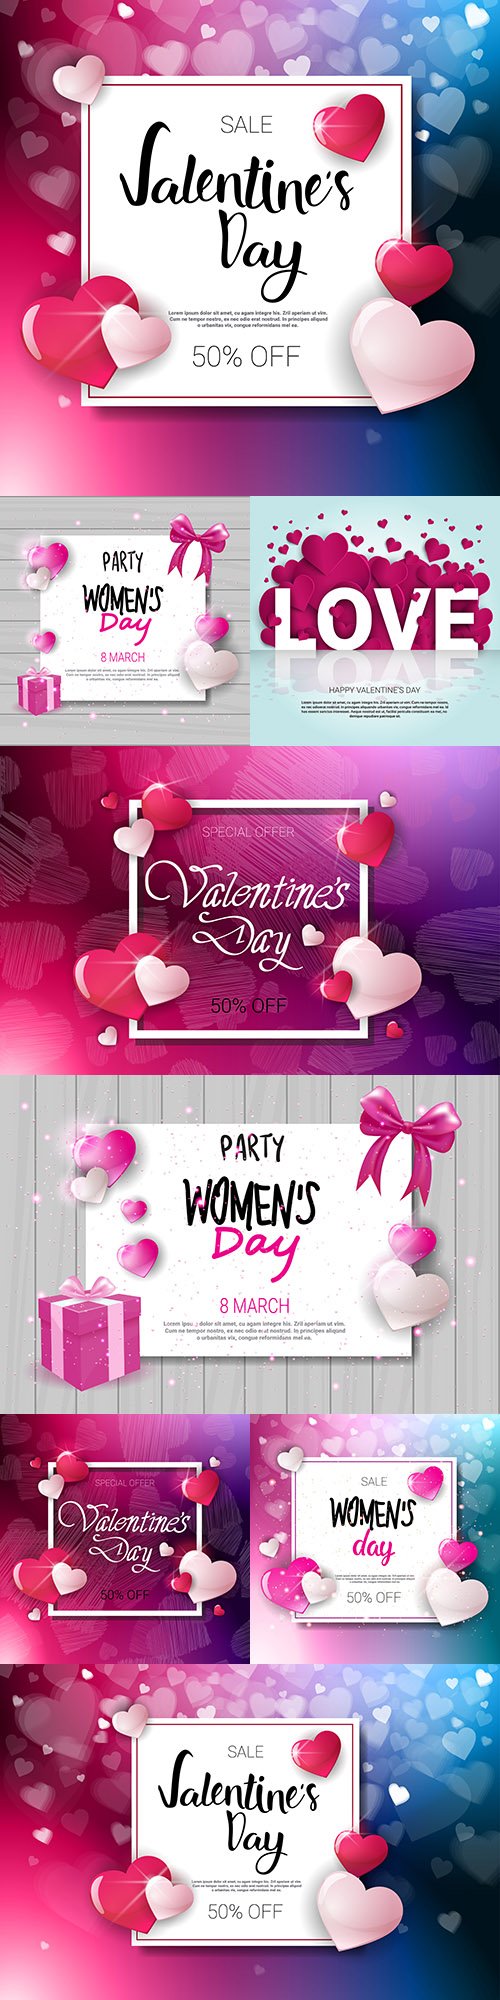 Valentine and Women's Day celebration design banner